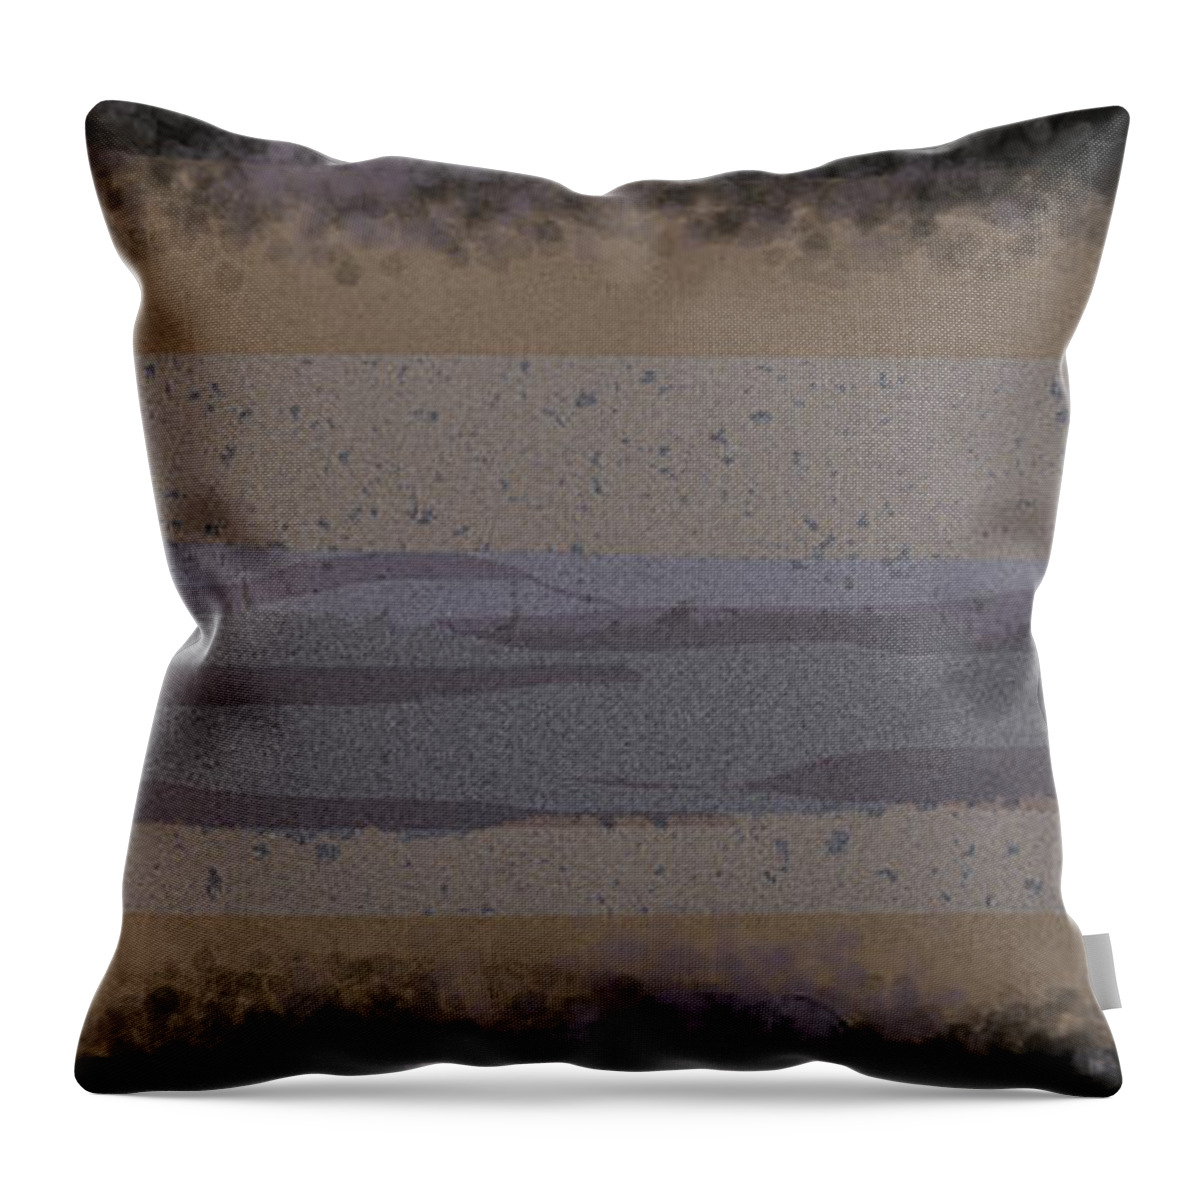 Black Throw Pillow featuring the digital art Black grey tan landscape by Anne Cameron Cutri